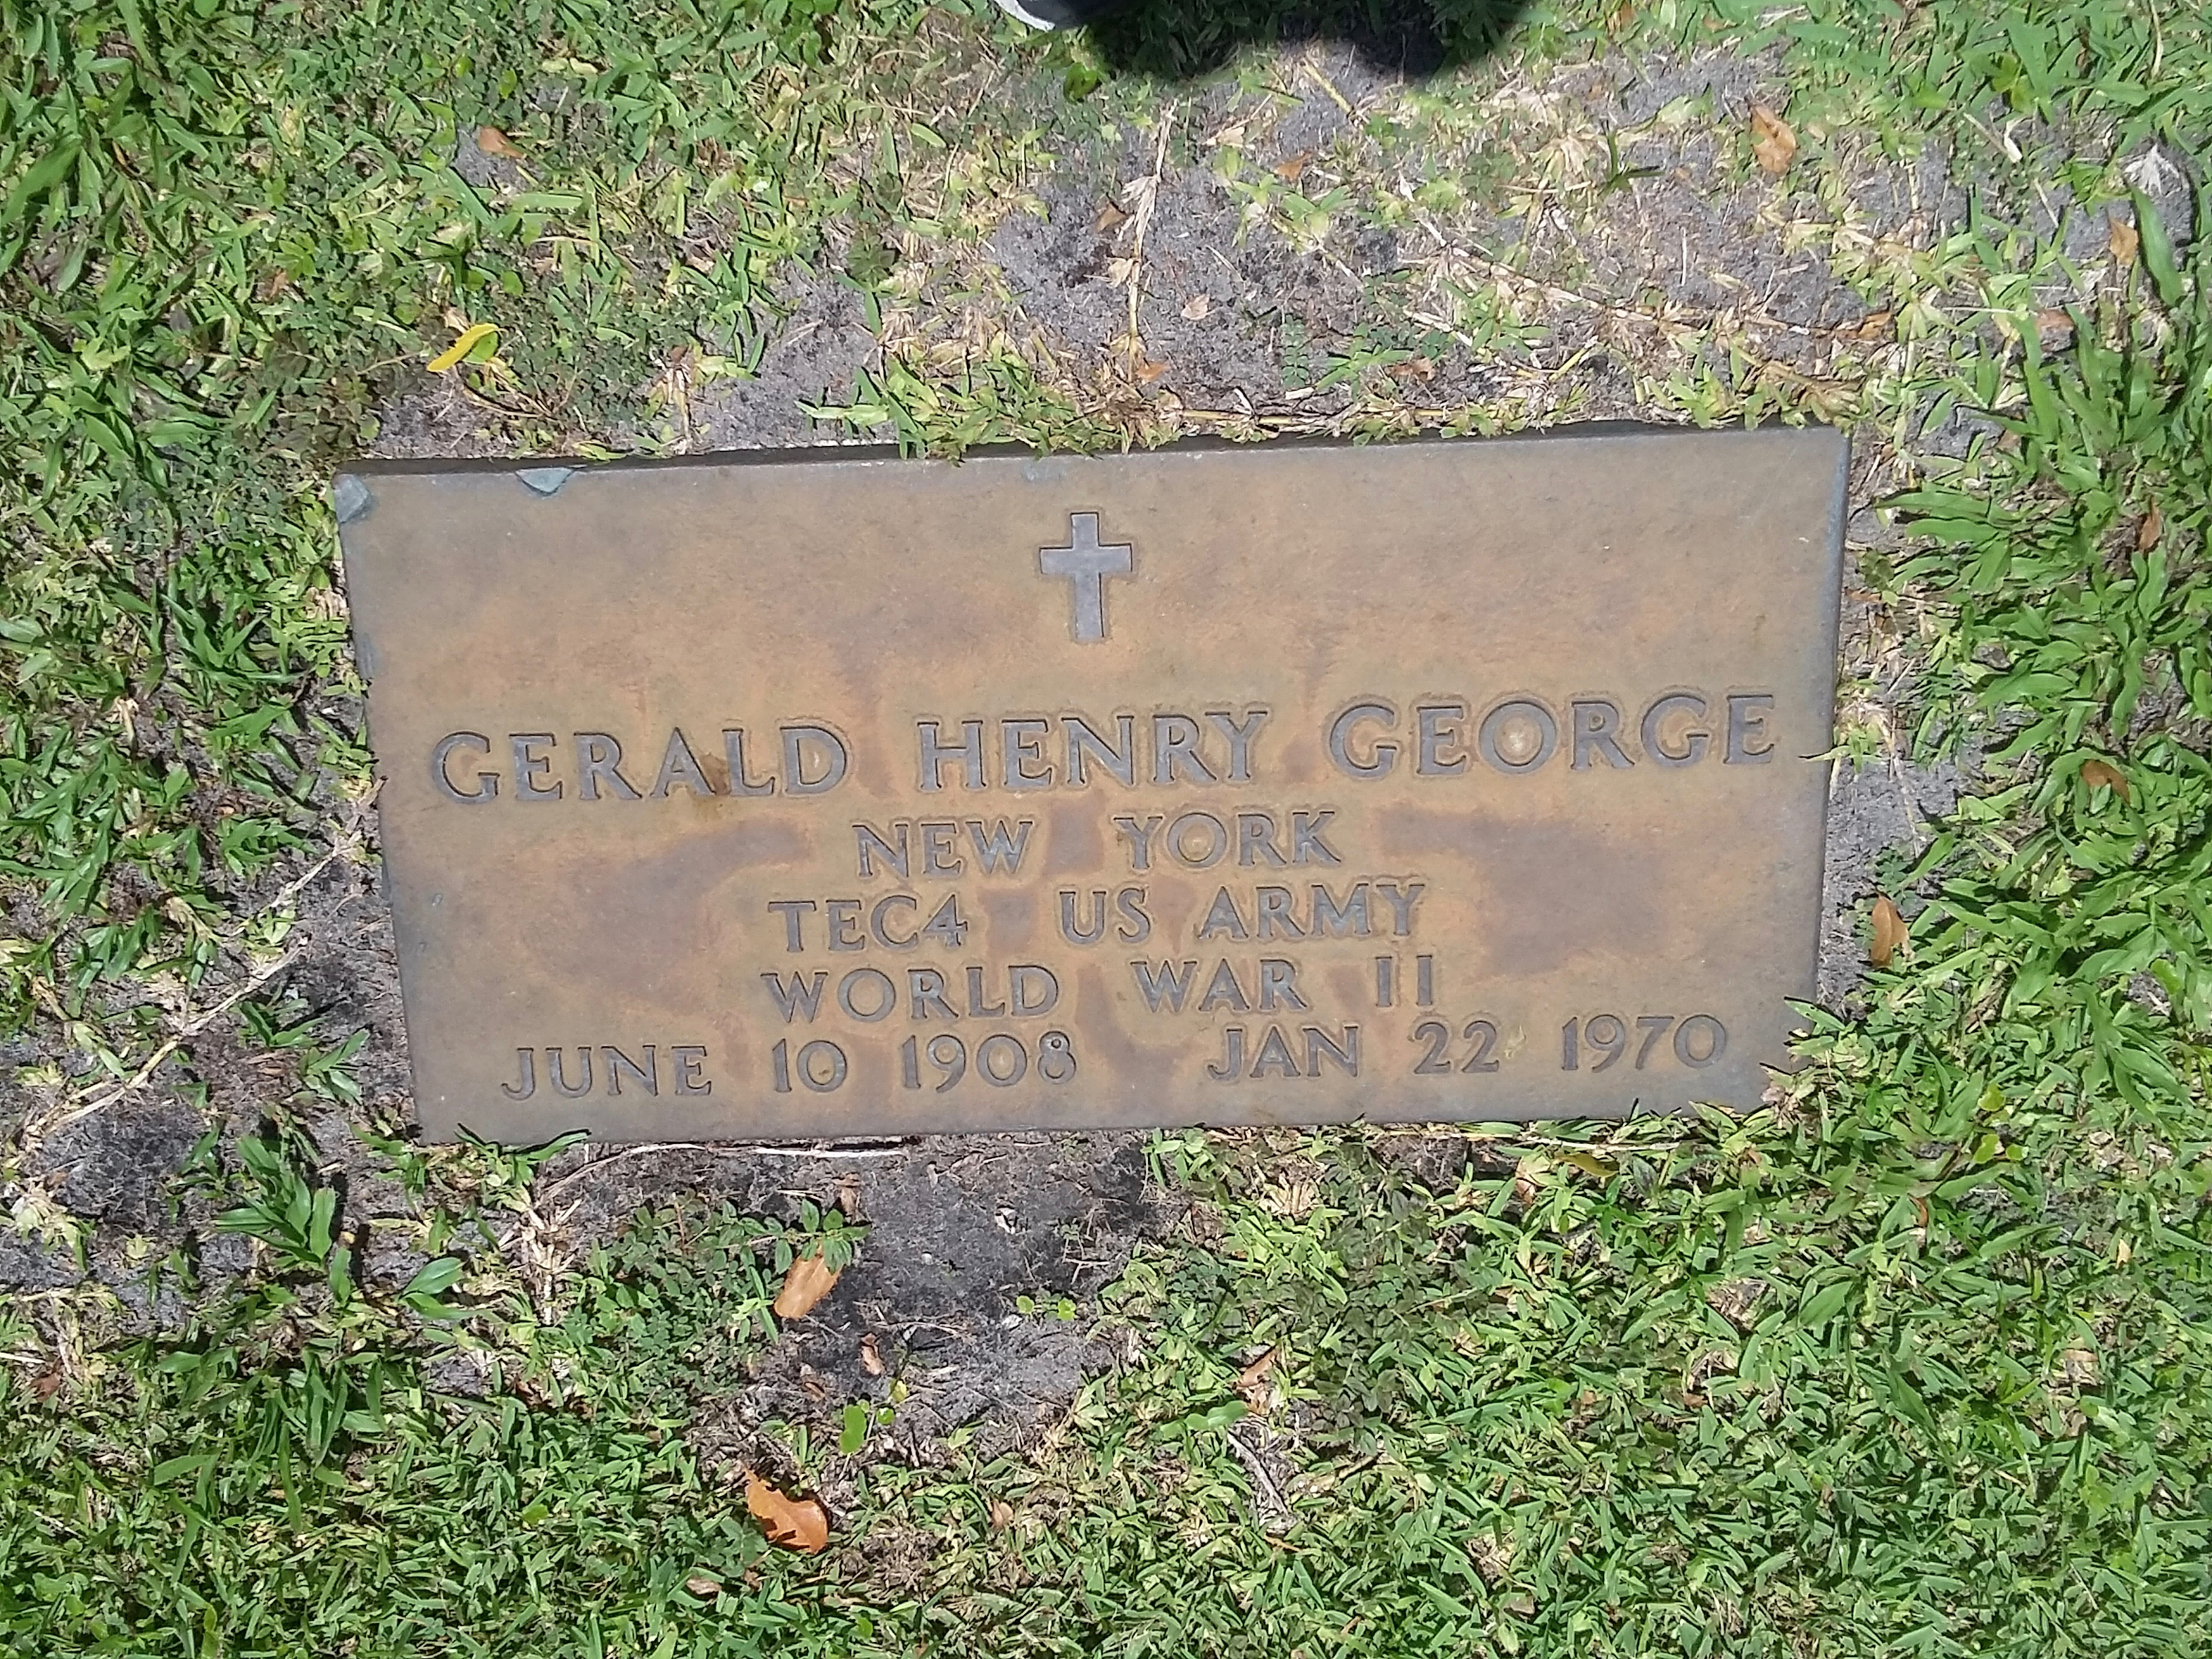 Gerald Henry George